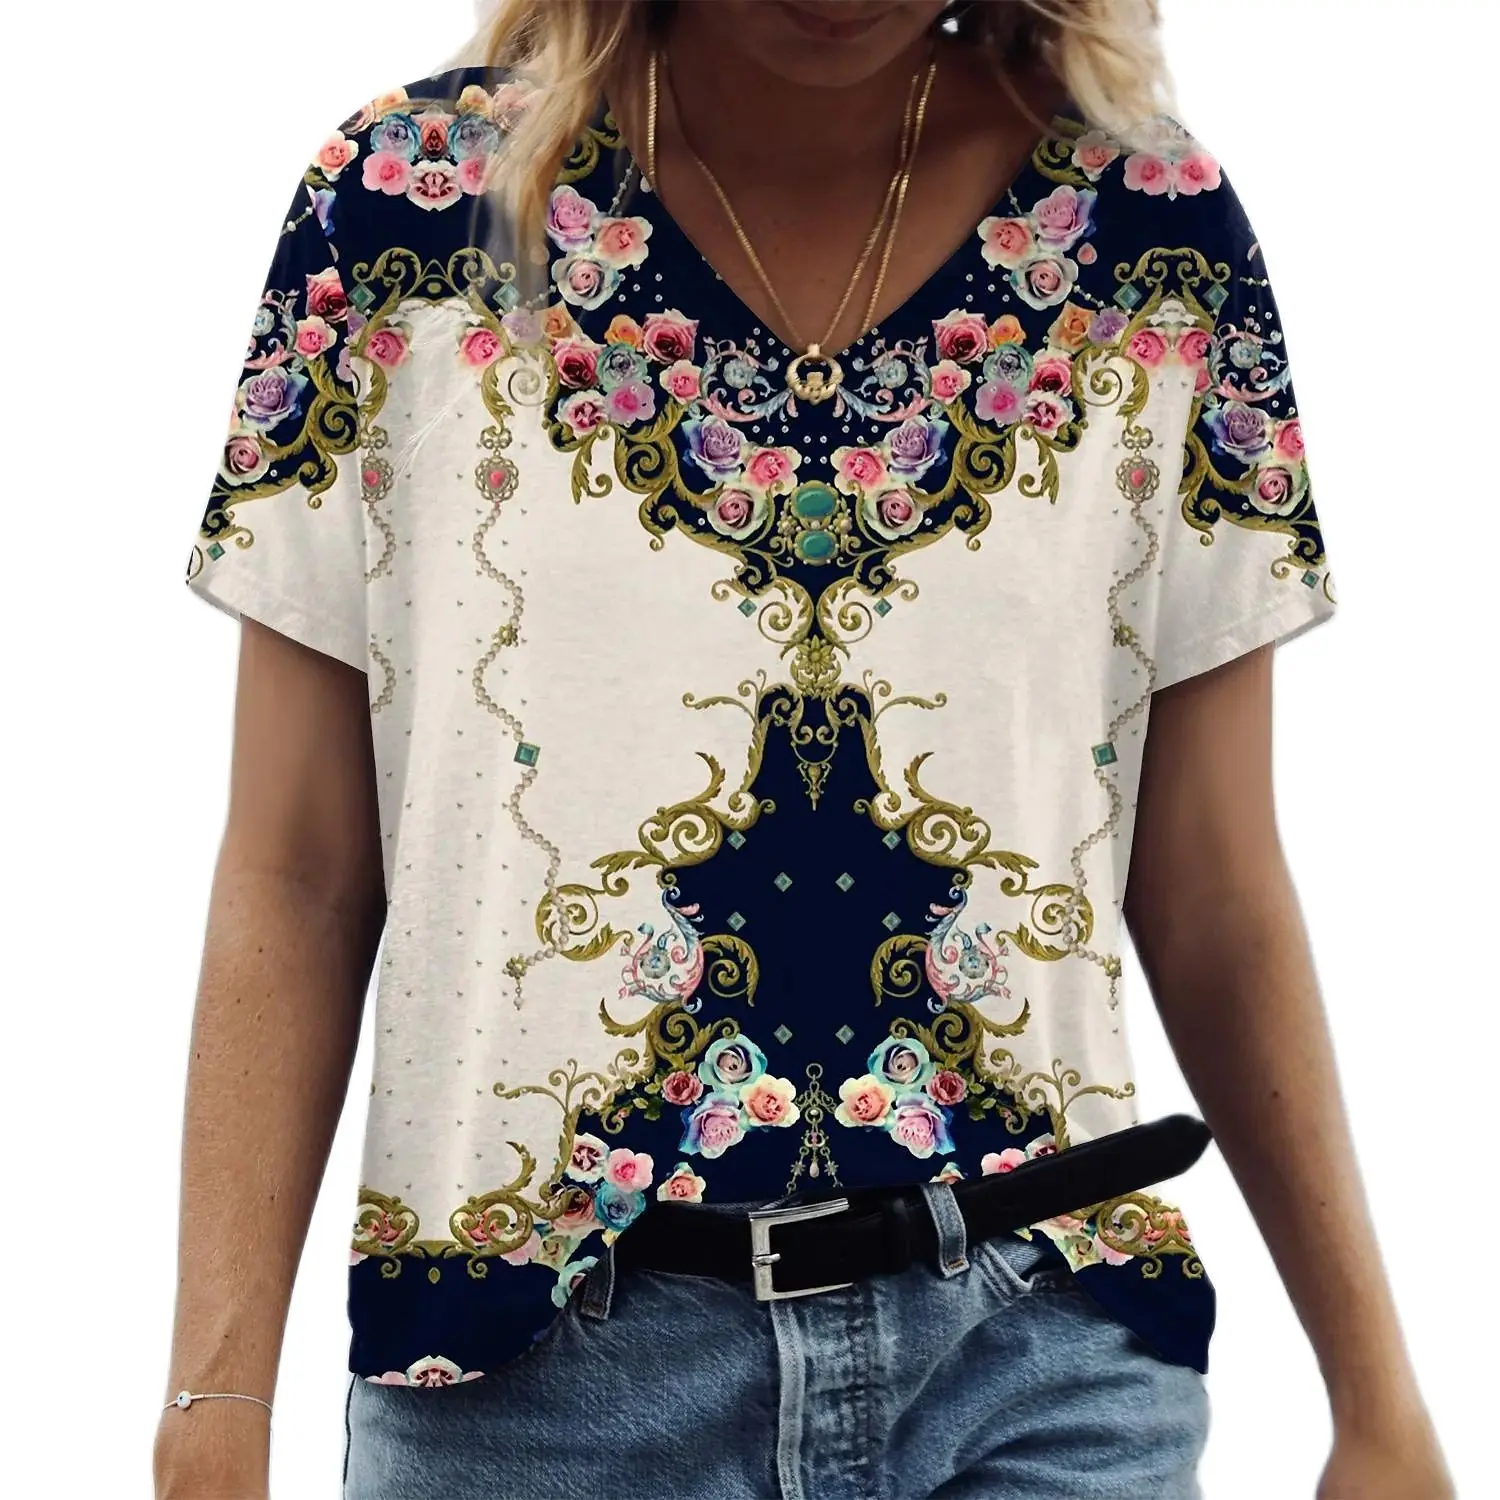 Купи Fashion T Shirt For Women 3d Flora Print V-neck Short Sleeve Tees Tops Summer Casual Female Y2k Clothes Oversized Women Clothing за 133 рублей в магазине AliExpress